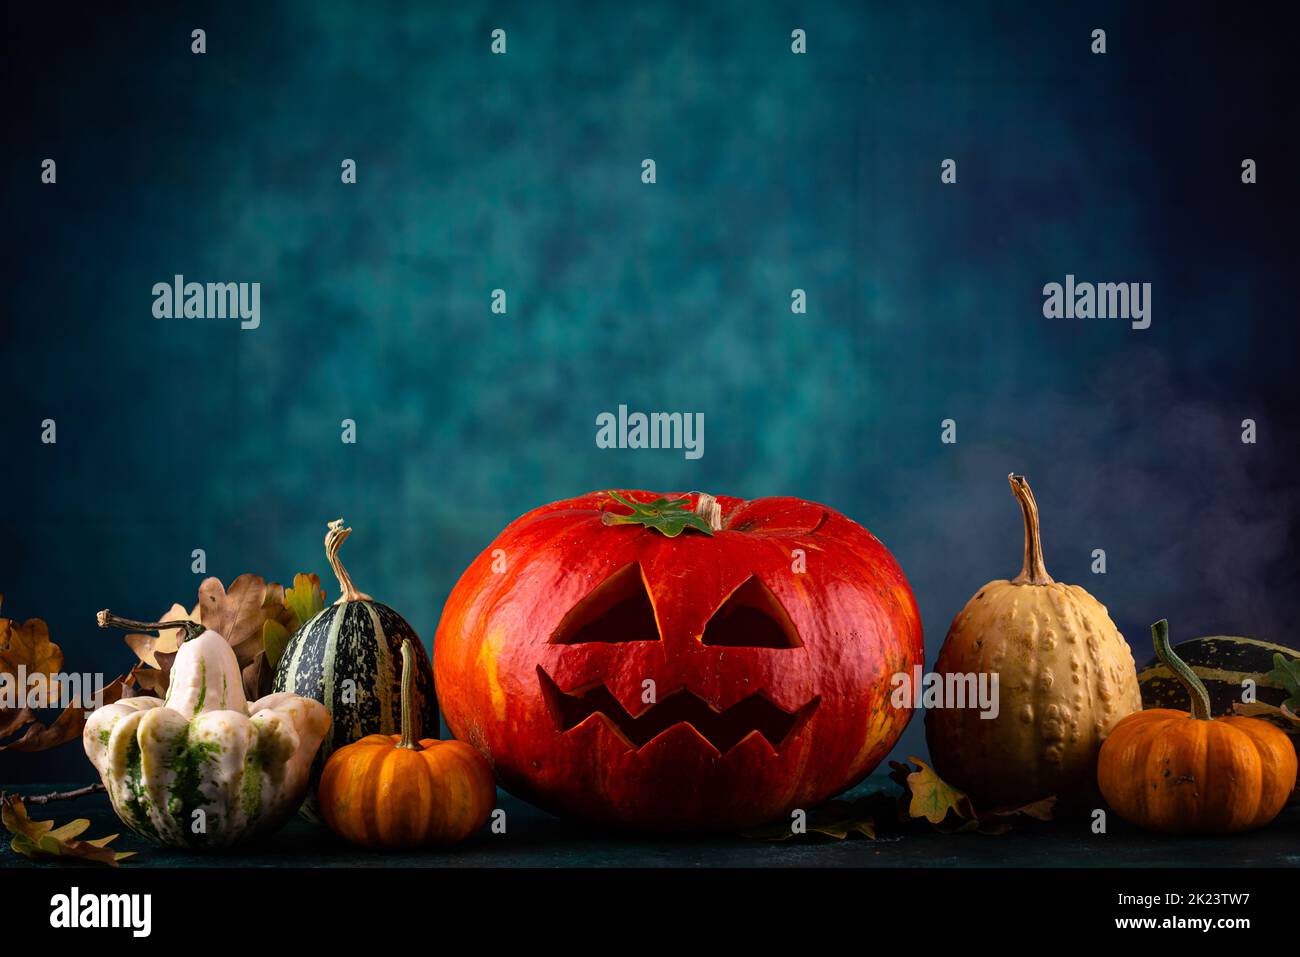 Halloween scary jack-o-lantern from pumpkin Stock Photo